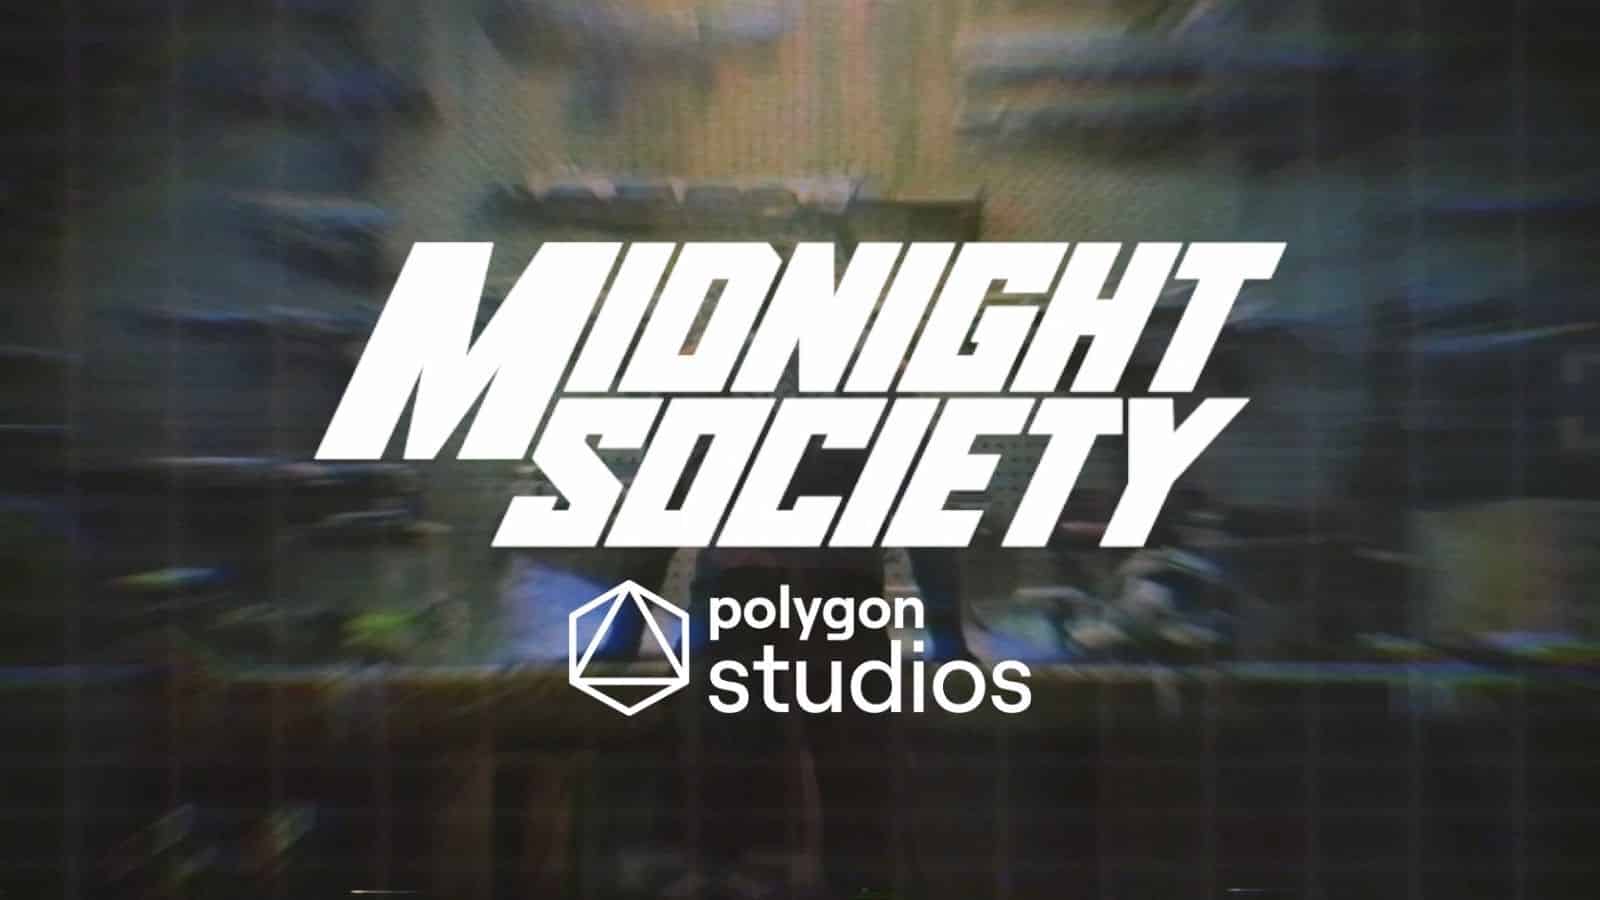 Midnight Society teams up with Polygon Studios